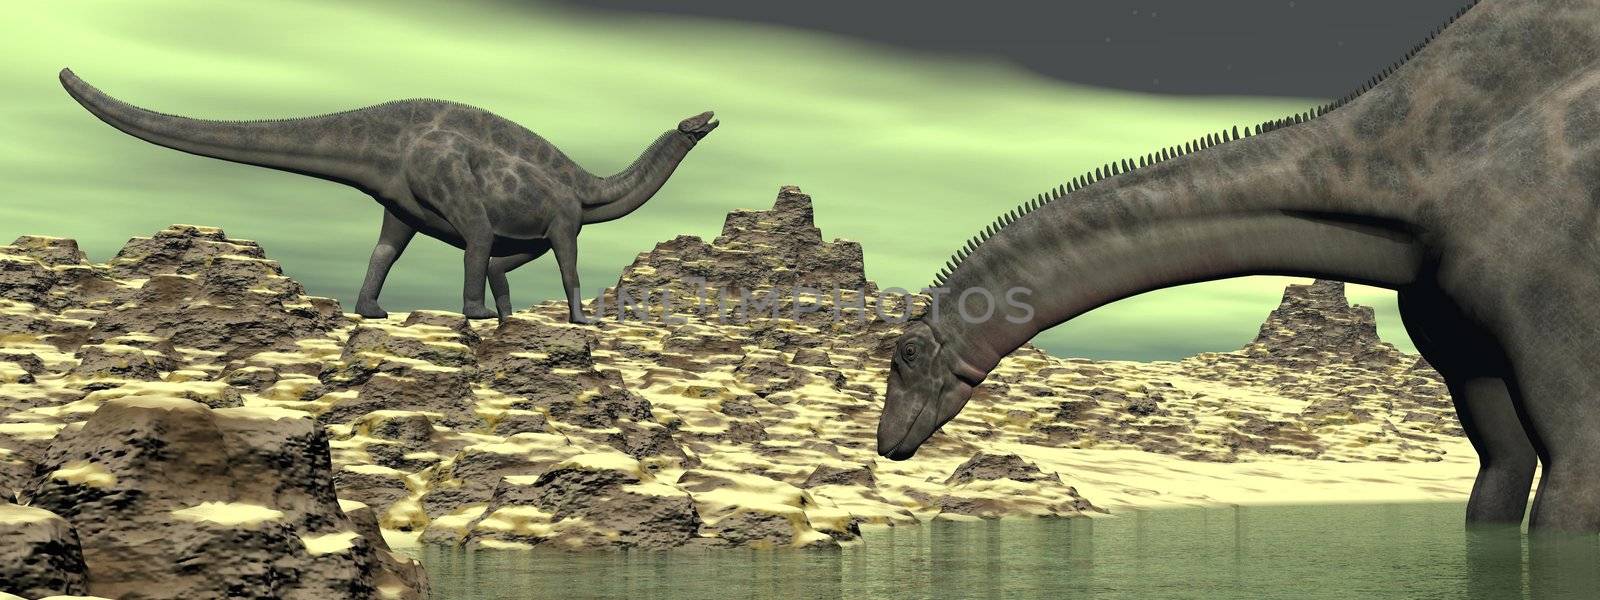 Dicraeosaurus dinosaur - 3D render by Elenaphotos21